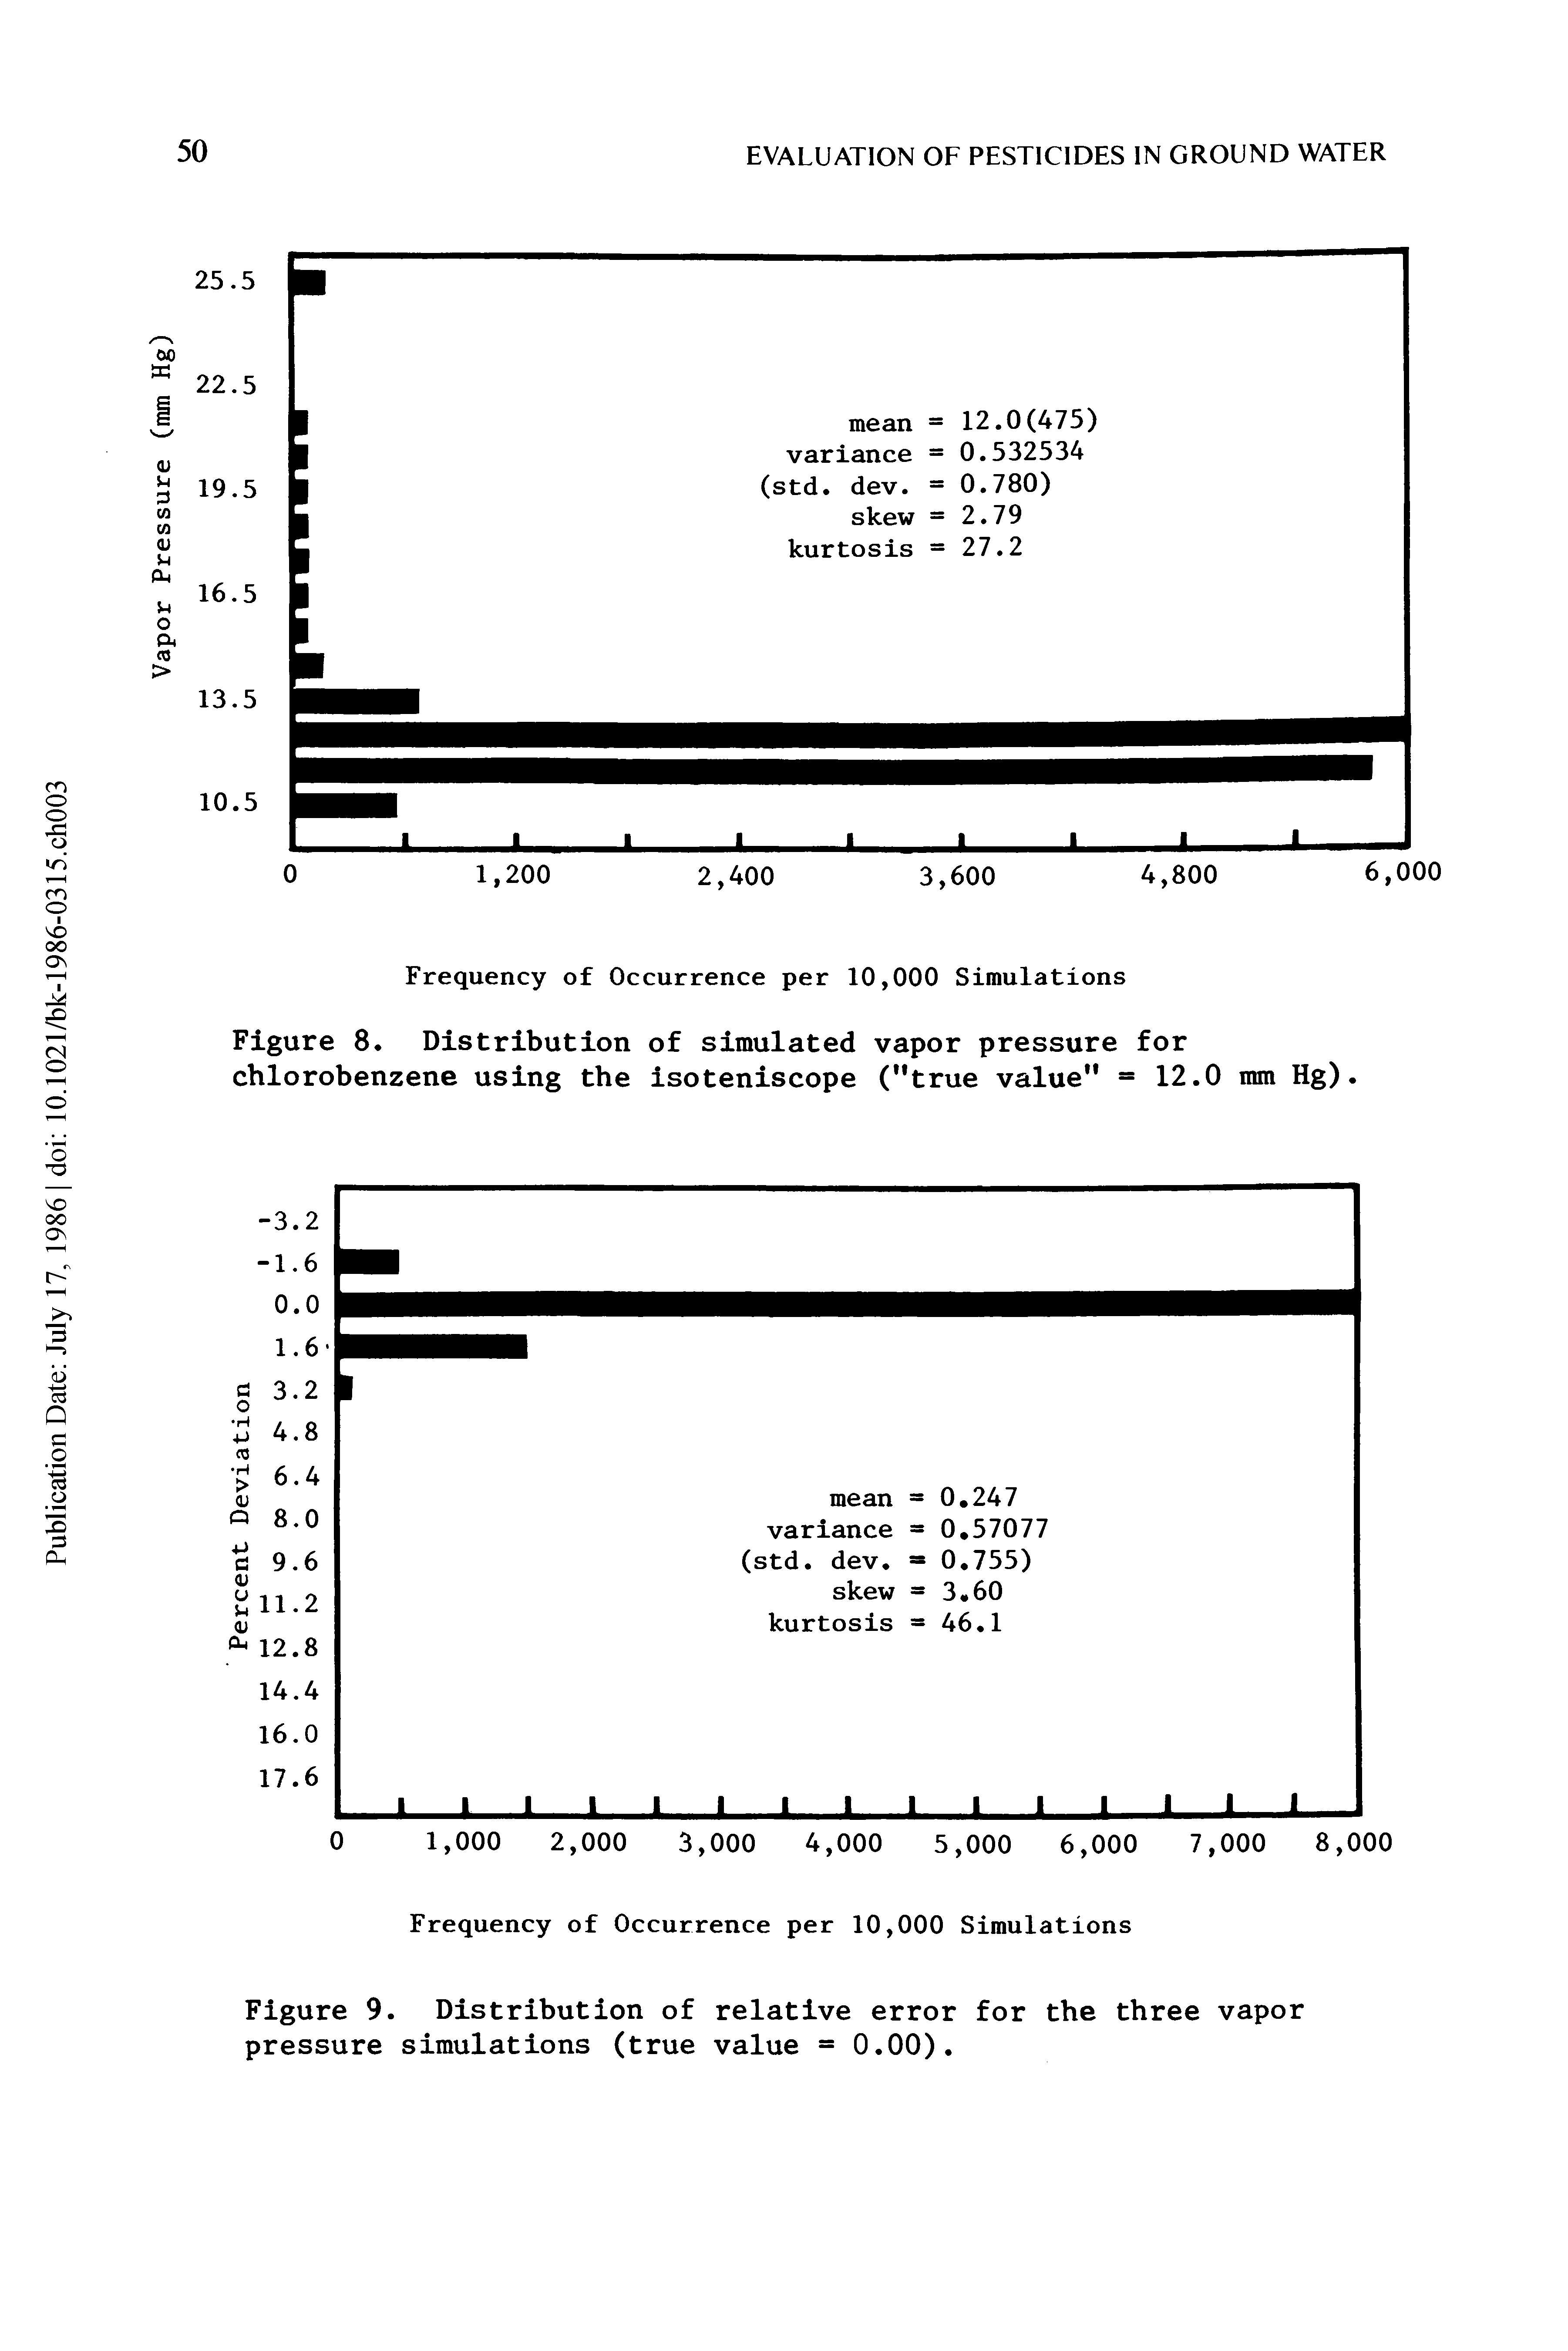 Figure 8. Distribution of simulated vapor pressure for chlorobenzene using the isoteniscope ("true value = 12.0 mm Hg).